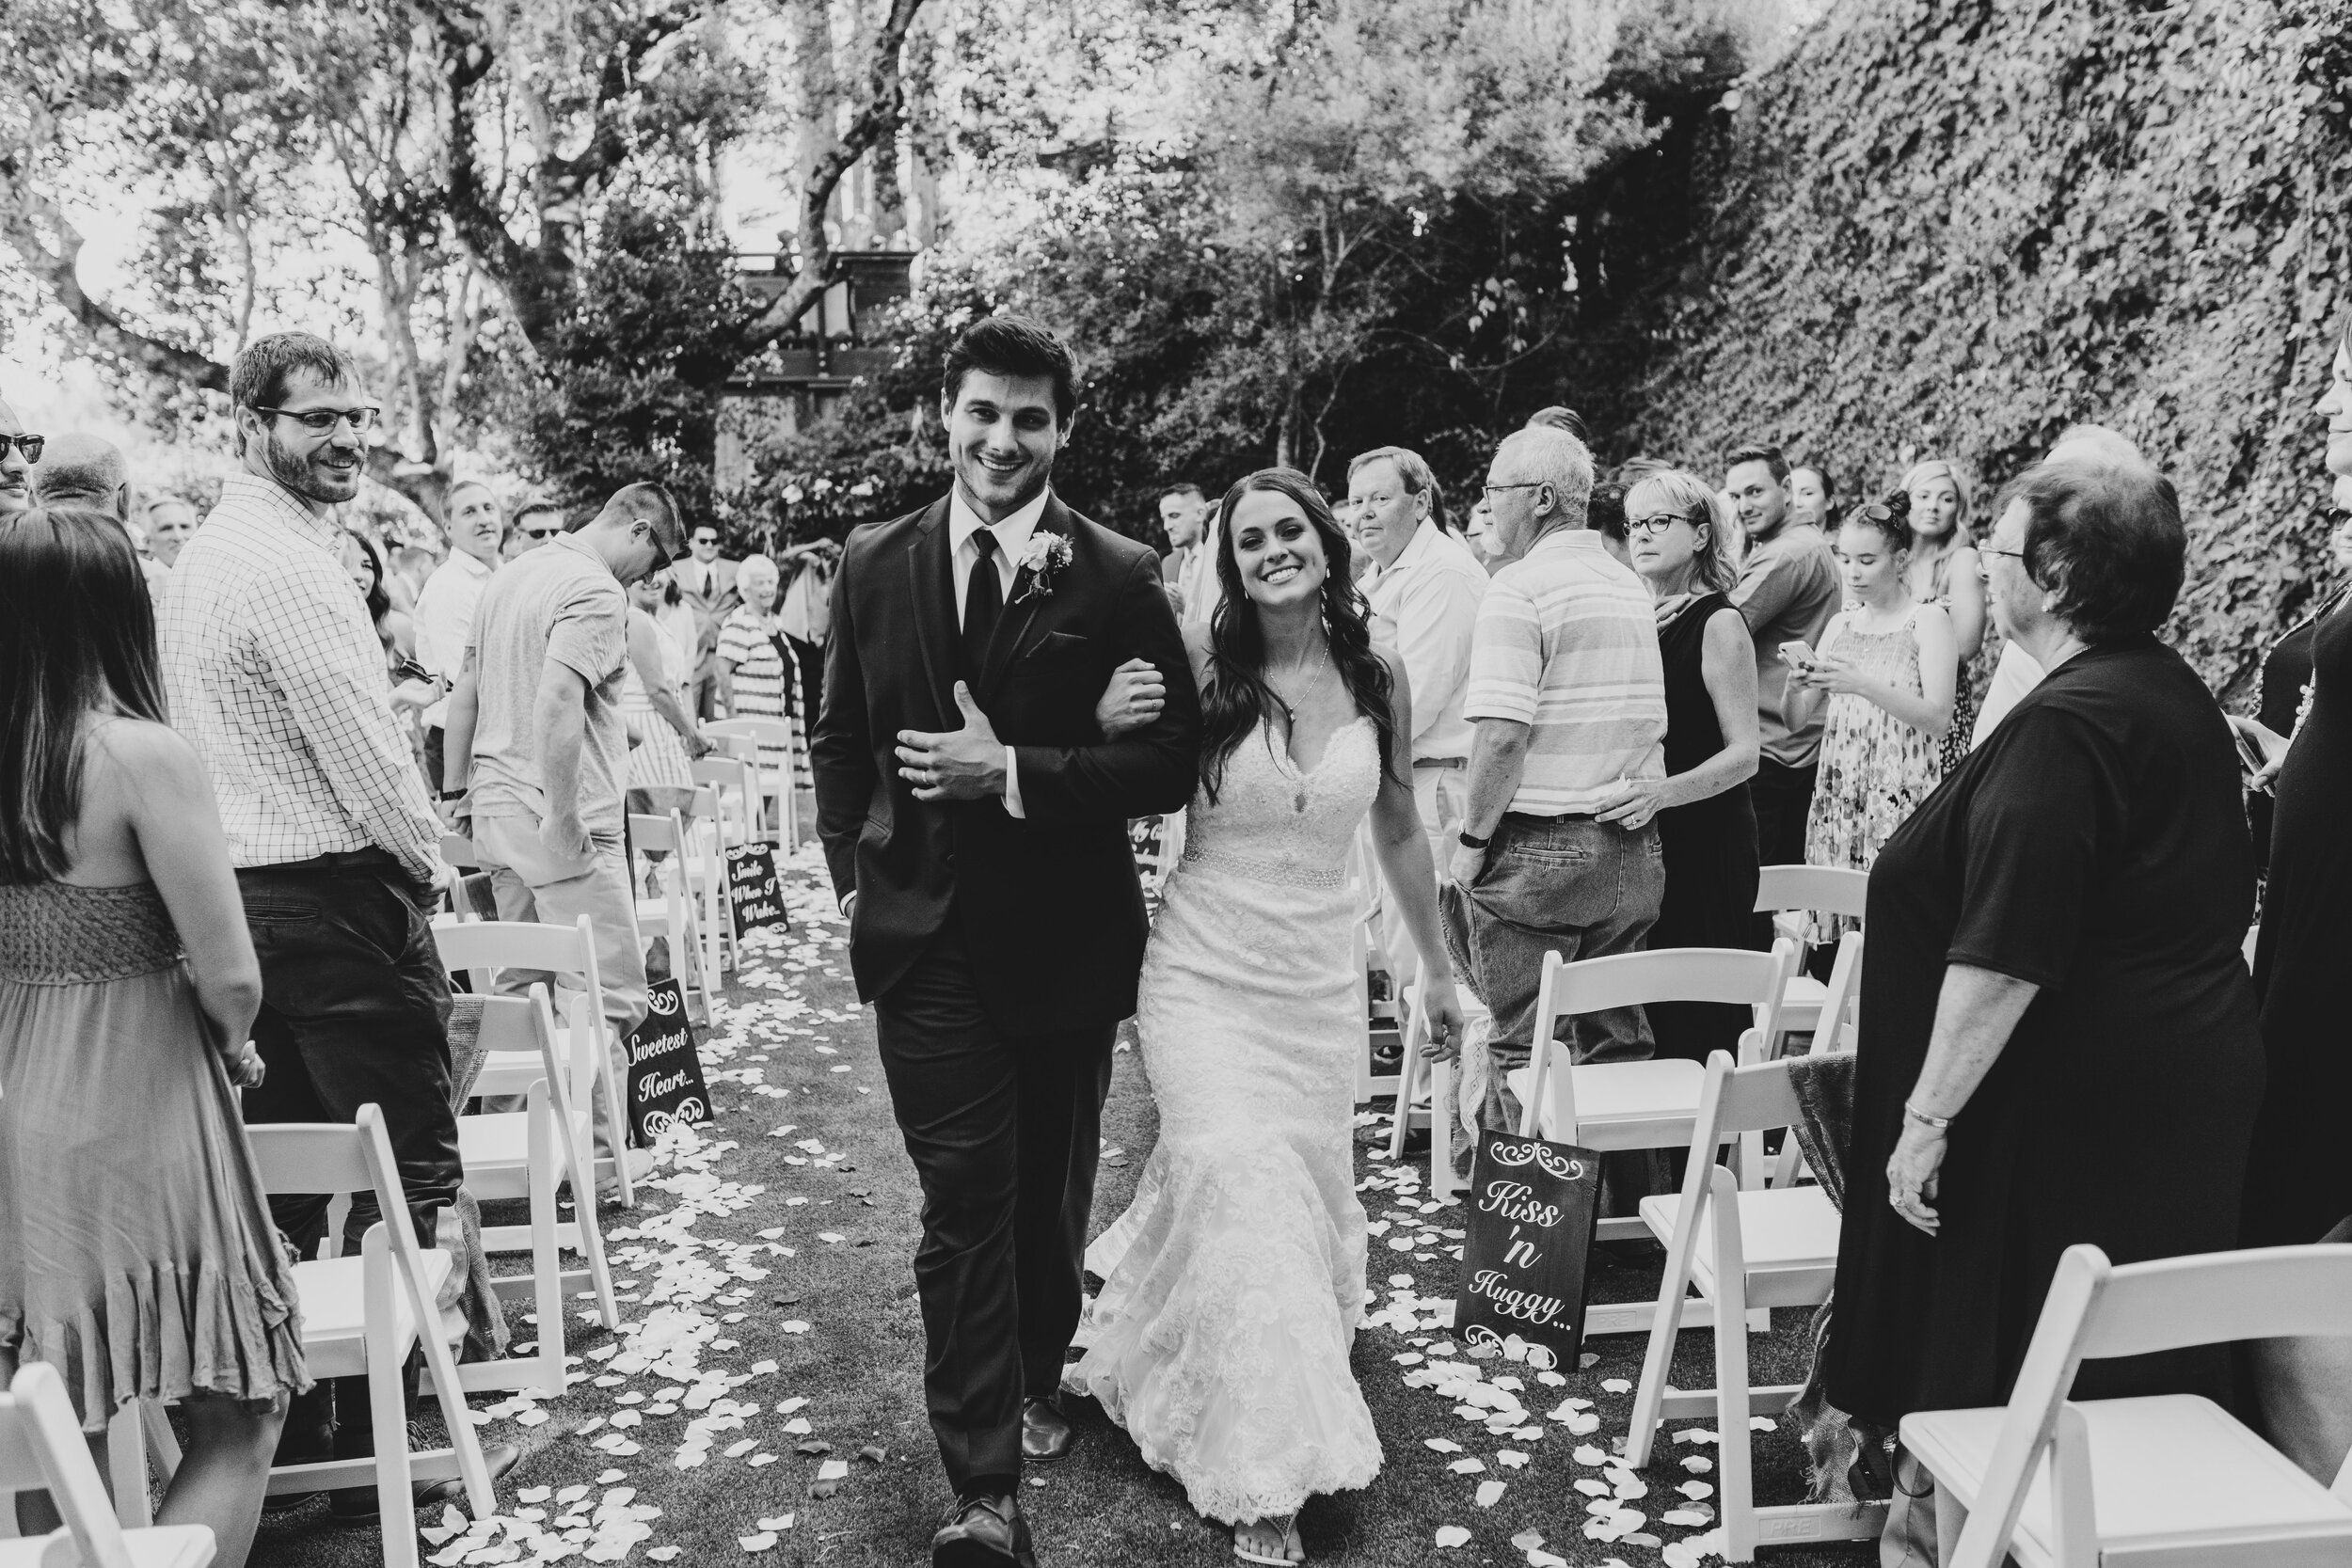 Kylee + Andrew -  Ross, California Backyard Summer Wedding143.jpg